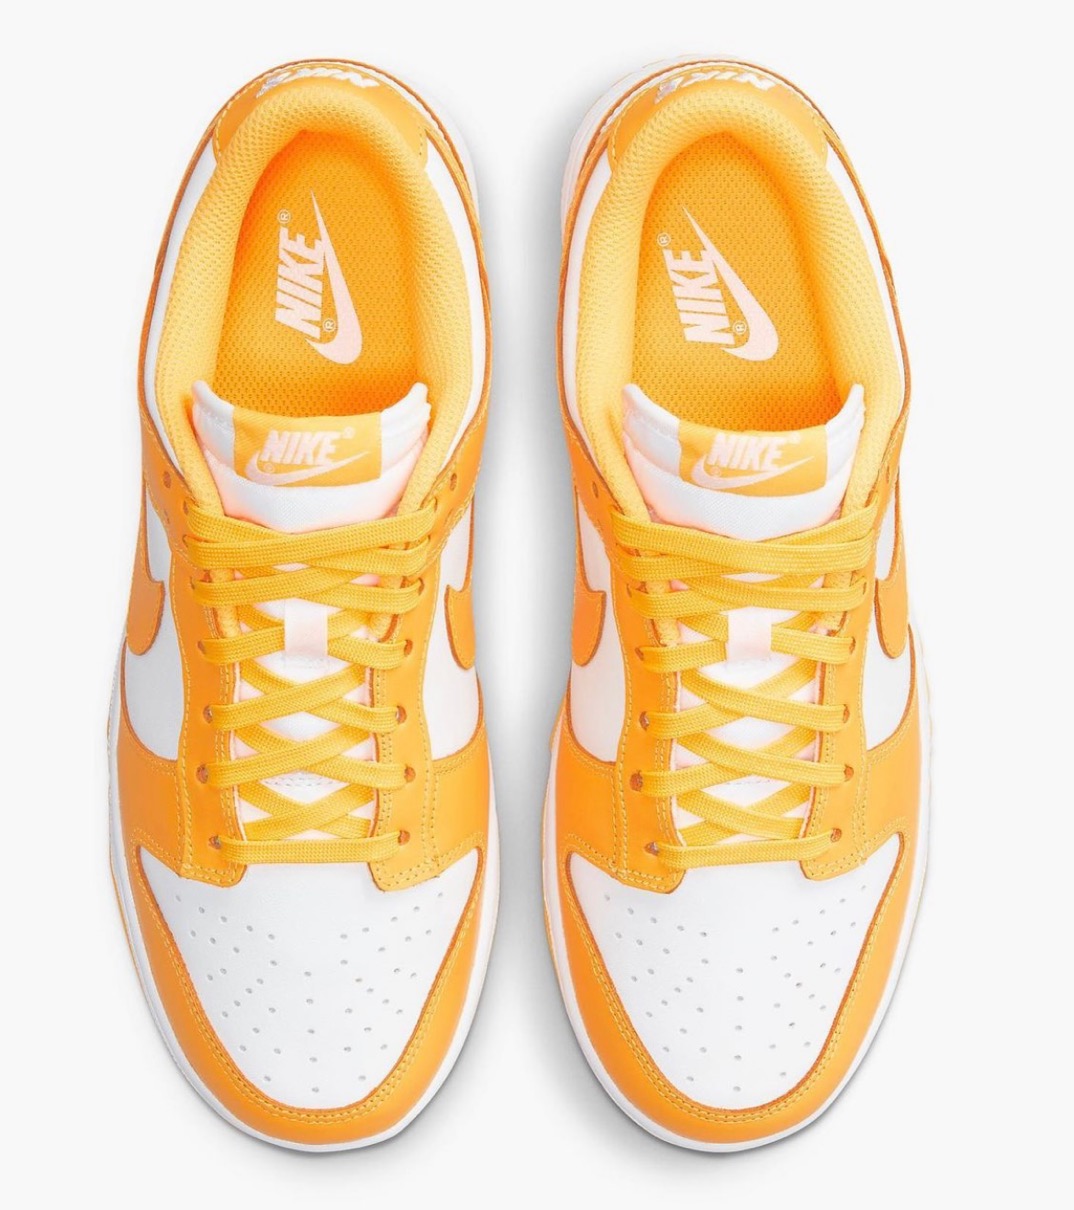 Nike】Wmns Dunk Low “Laser Orange”が国内5月7日に発売予定 | UP TO DATE